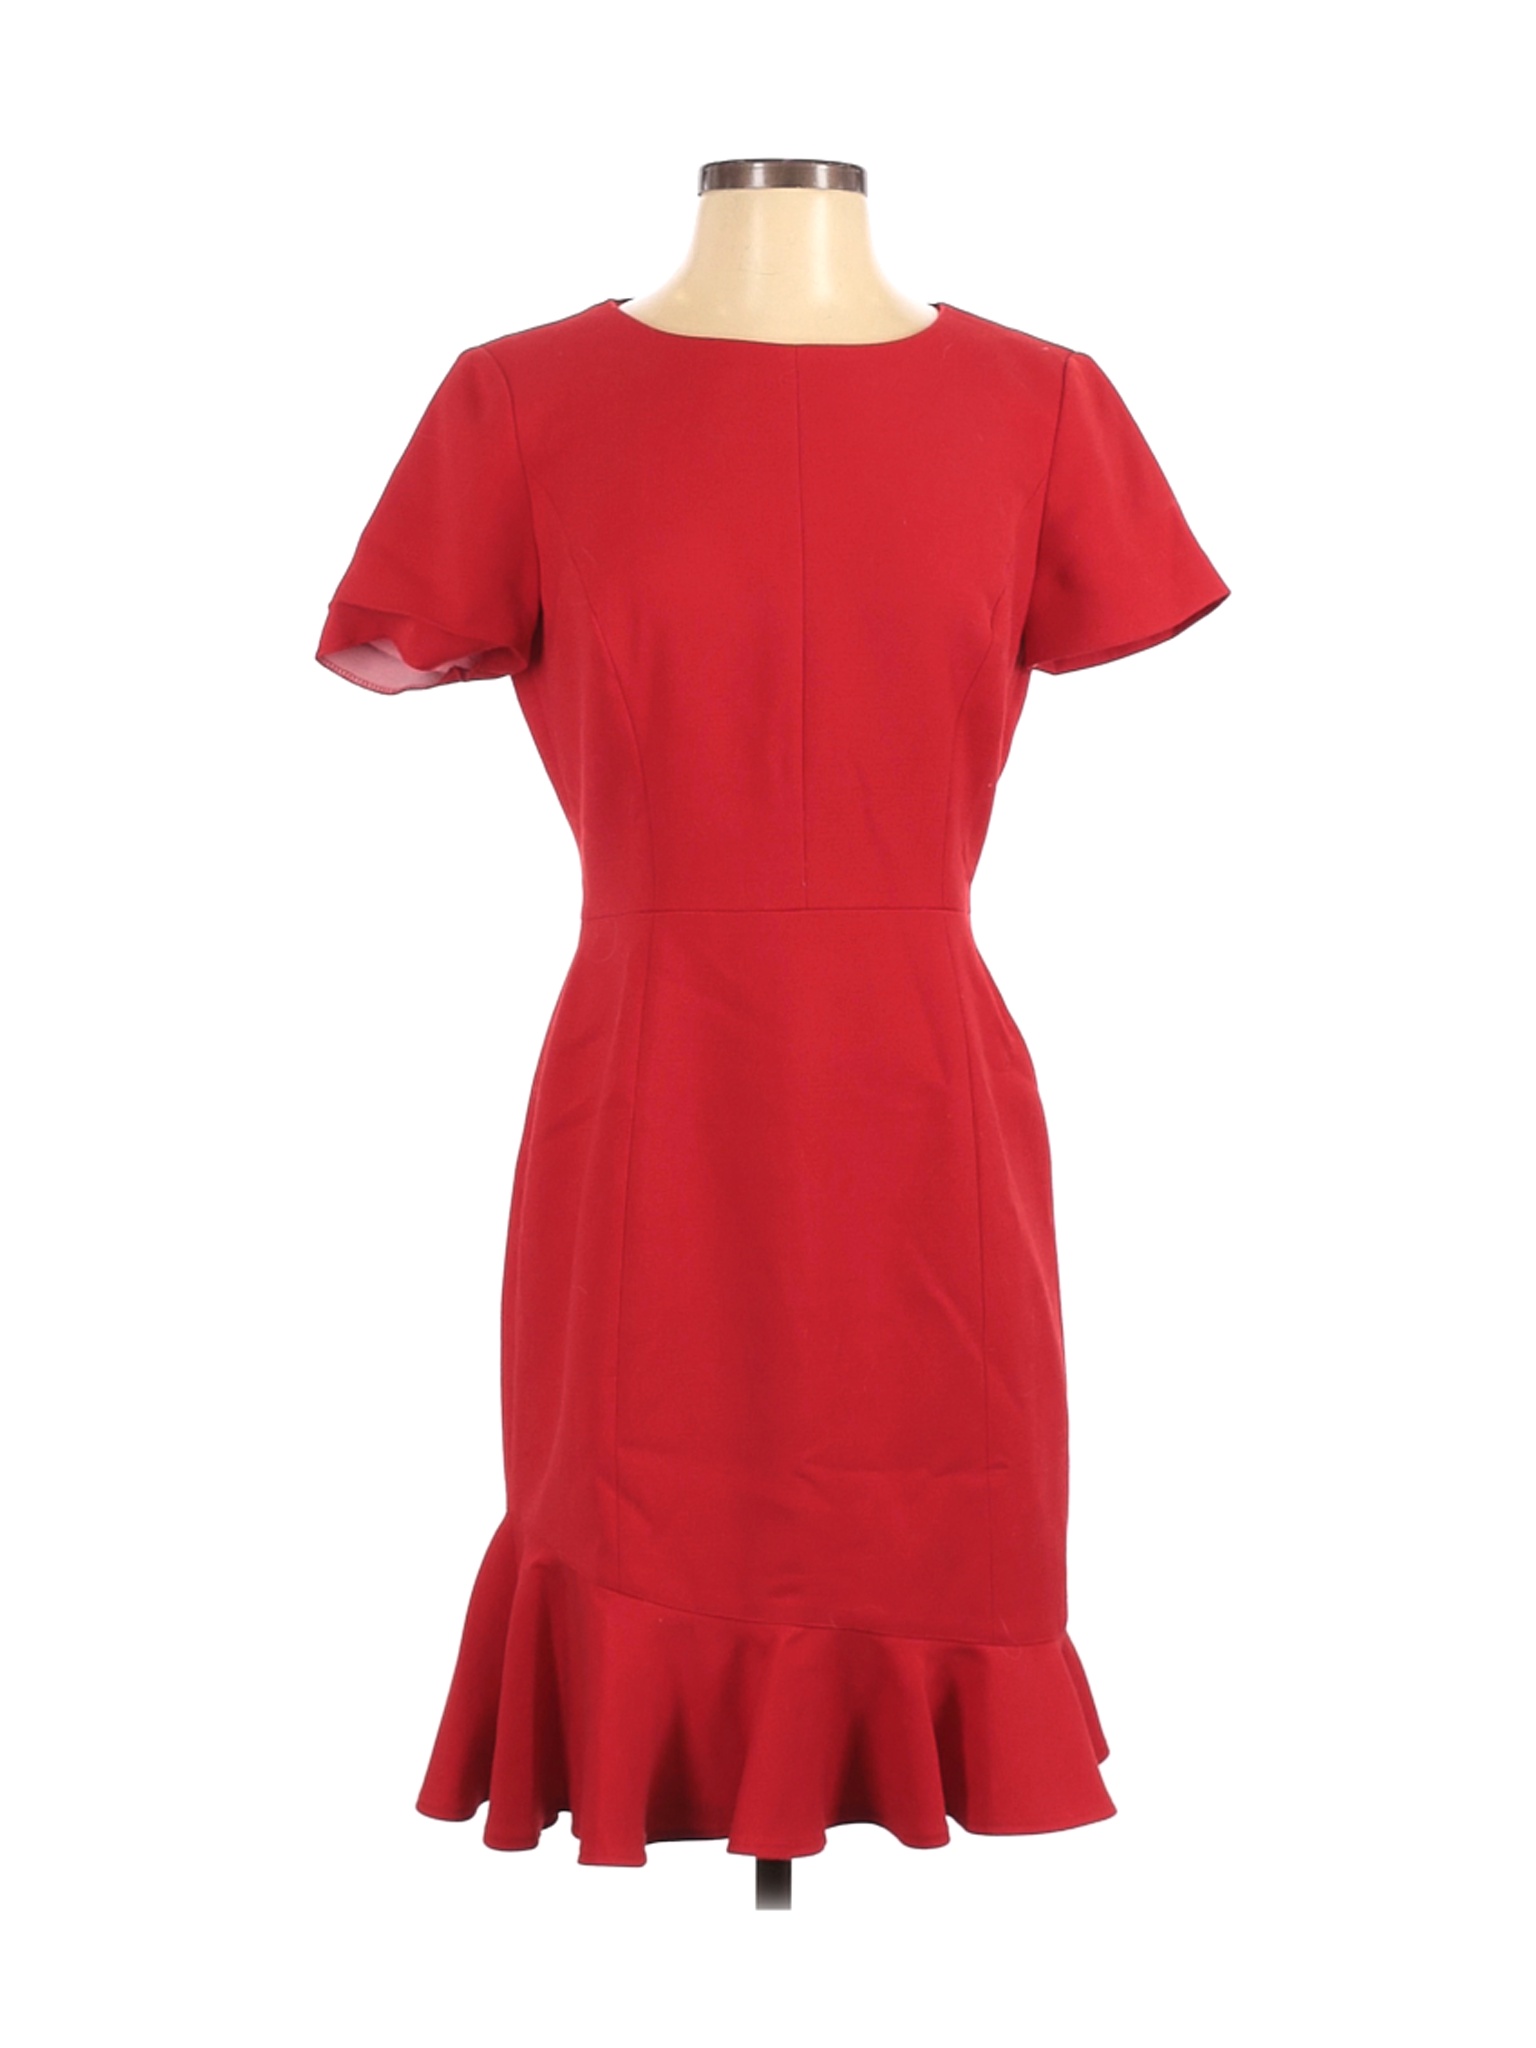 Cremieux Women Red Casual Dress 4 | eBay